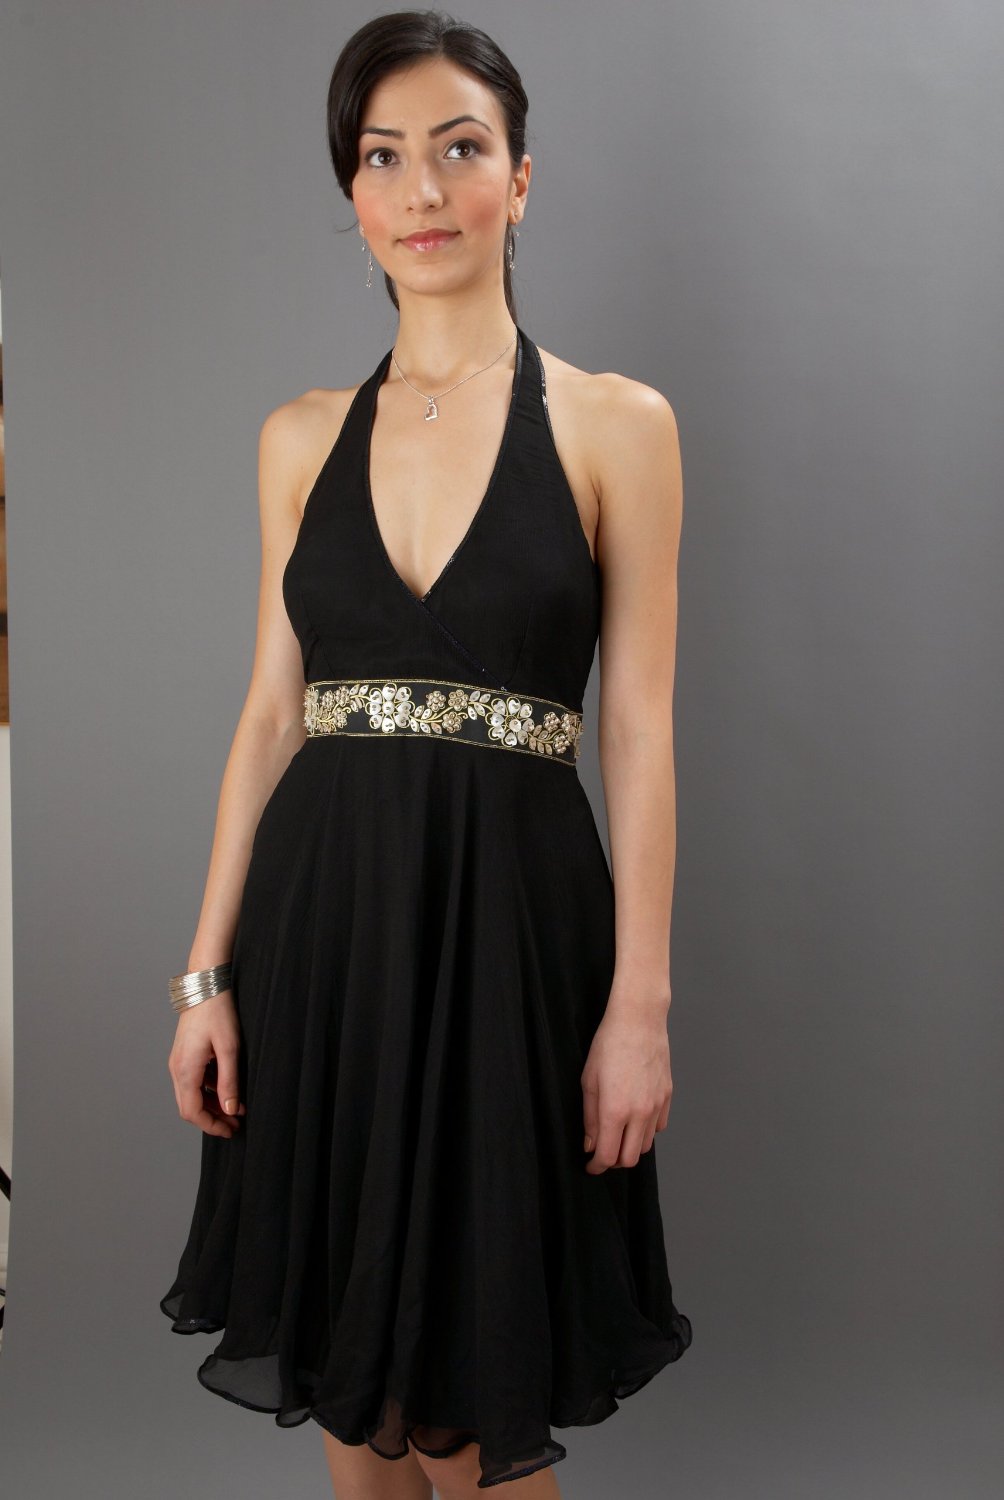 Black Dresses for Women: Styling on the Next Level – careyfashion.com